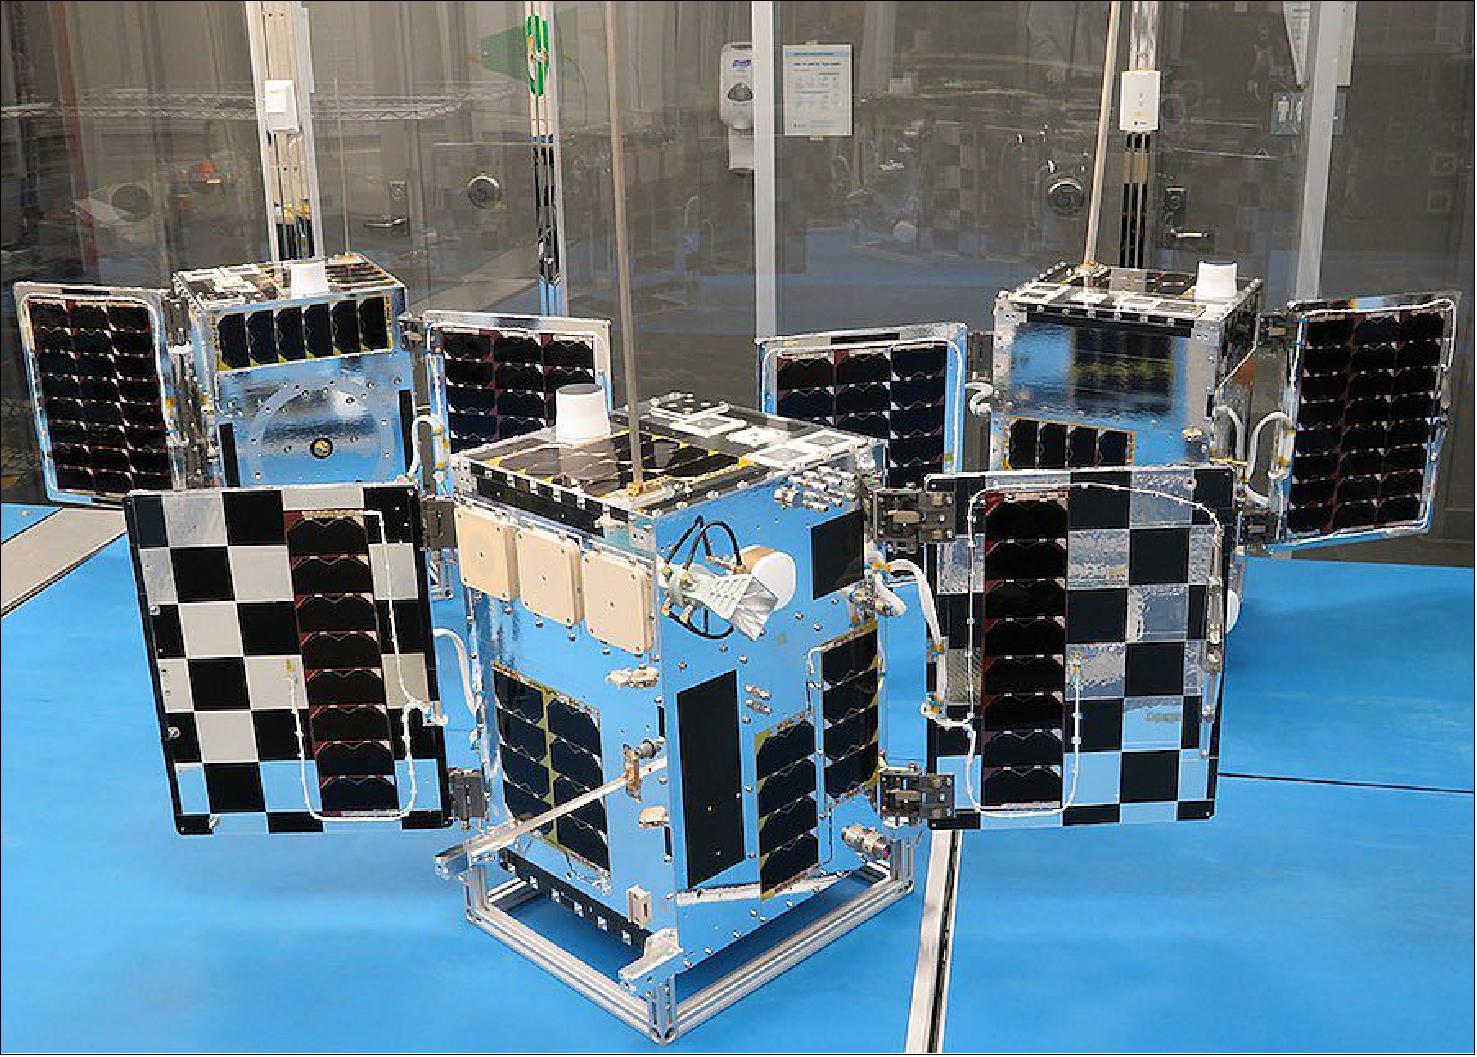 Figure 6: HawkEye 360's three newest satellites on Transporter-1 (image credit: HawkEye 360)